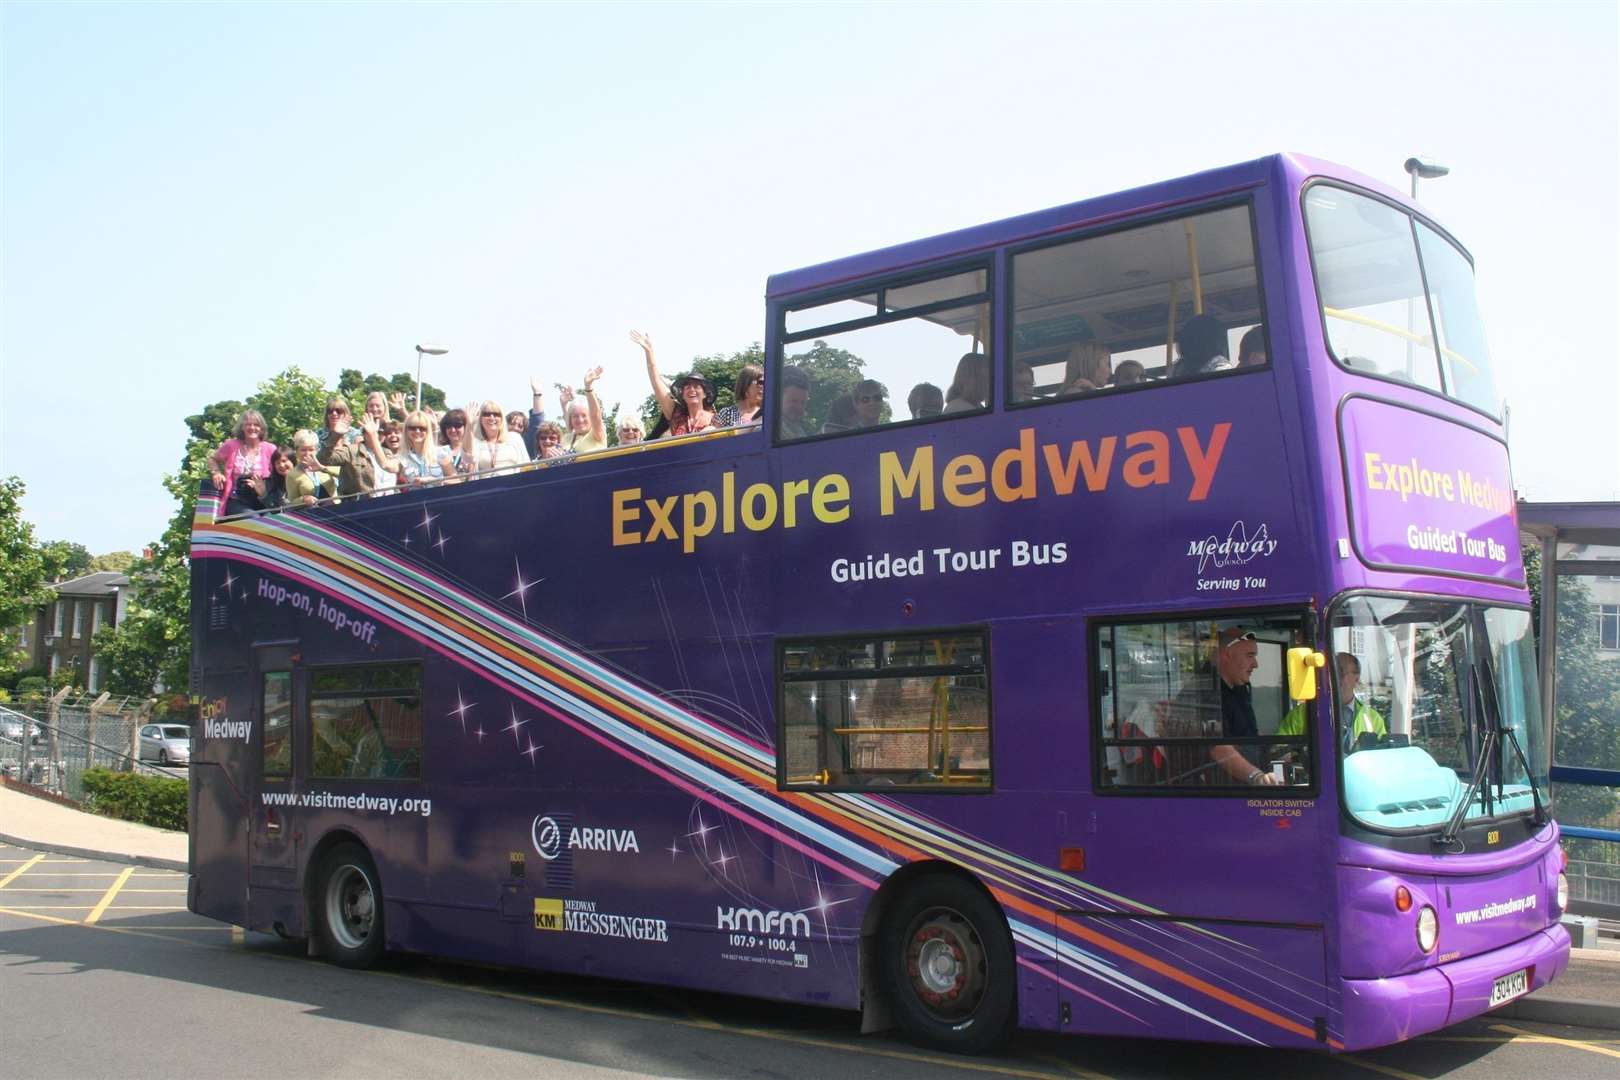 Take an open bus through Medway